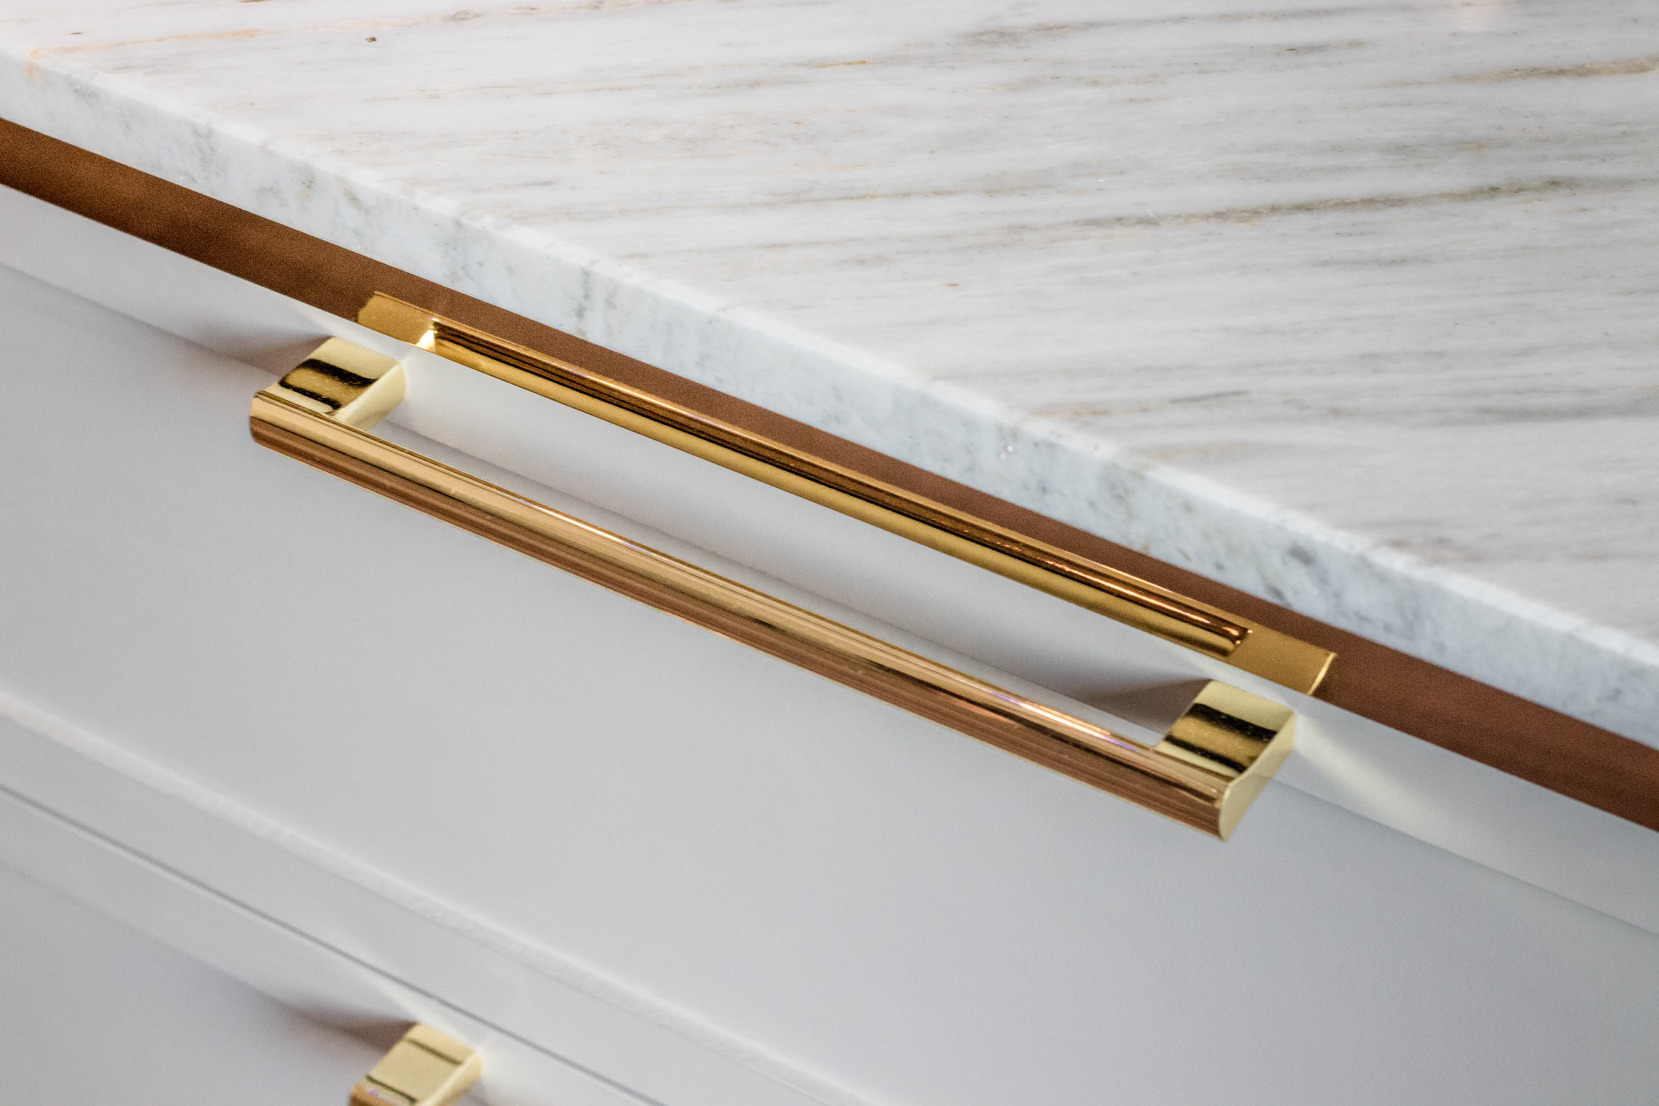 Gold-plated kitchen furniture handles